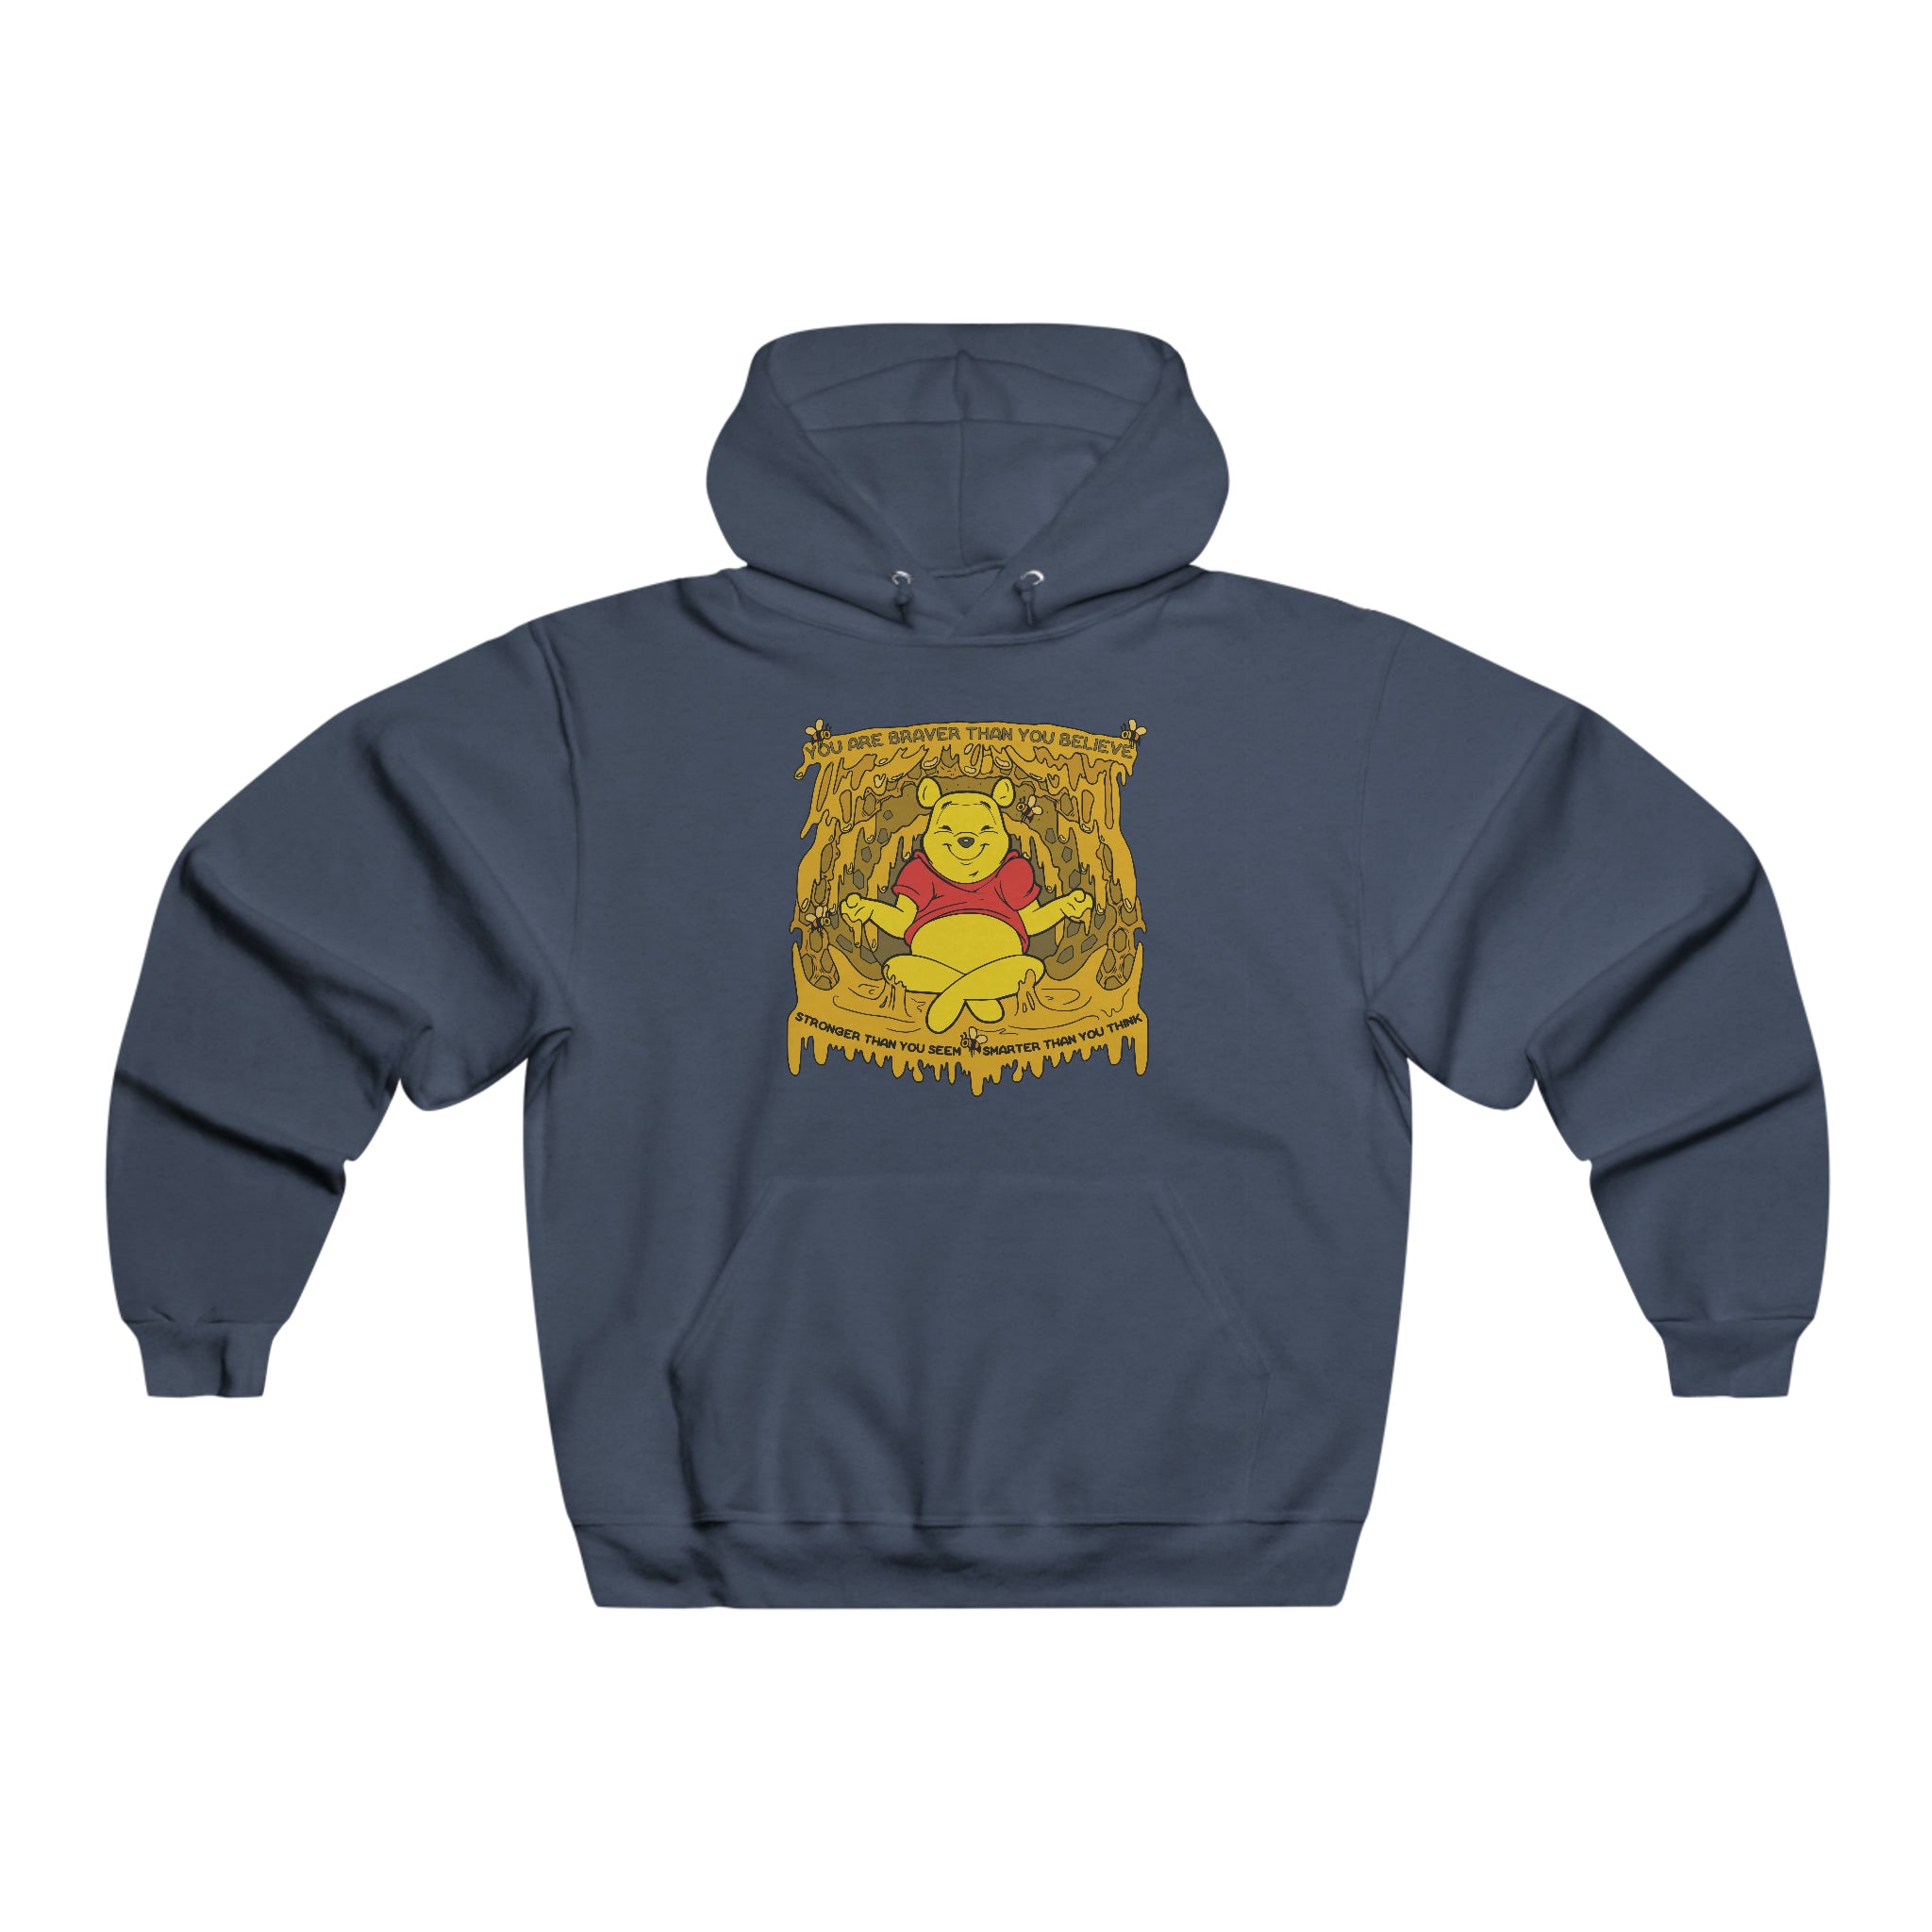 Winnie Braver Than You Seem Pooh Meditation Honeycomb Bee Hoodie 2 Sided Men&#39;s Hooded Sweatshirt By Carissa Williams X Mythical Merch